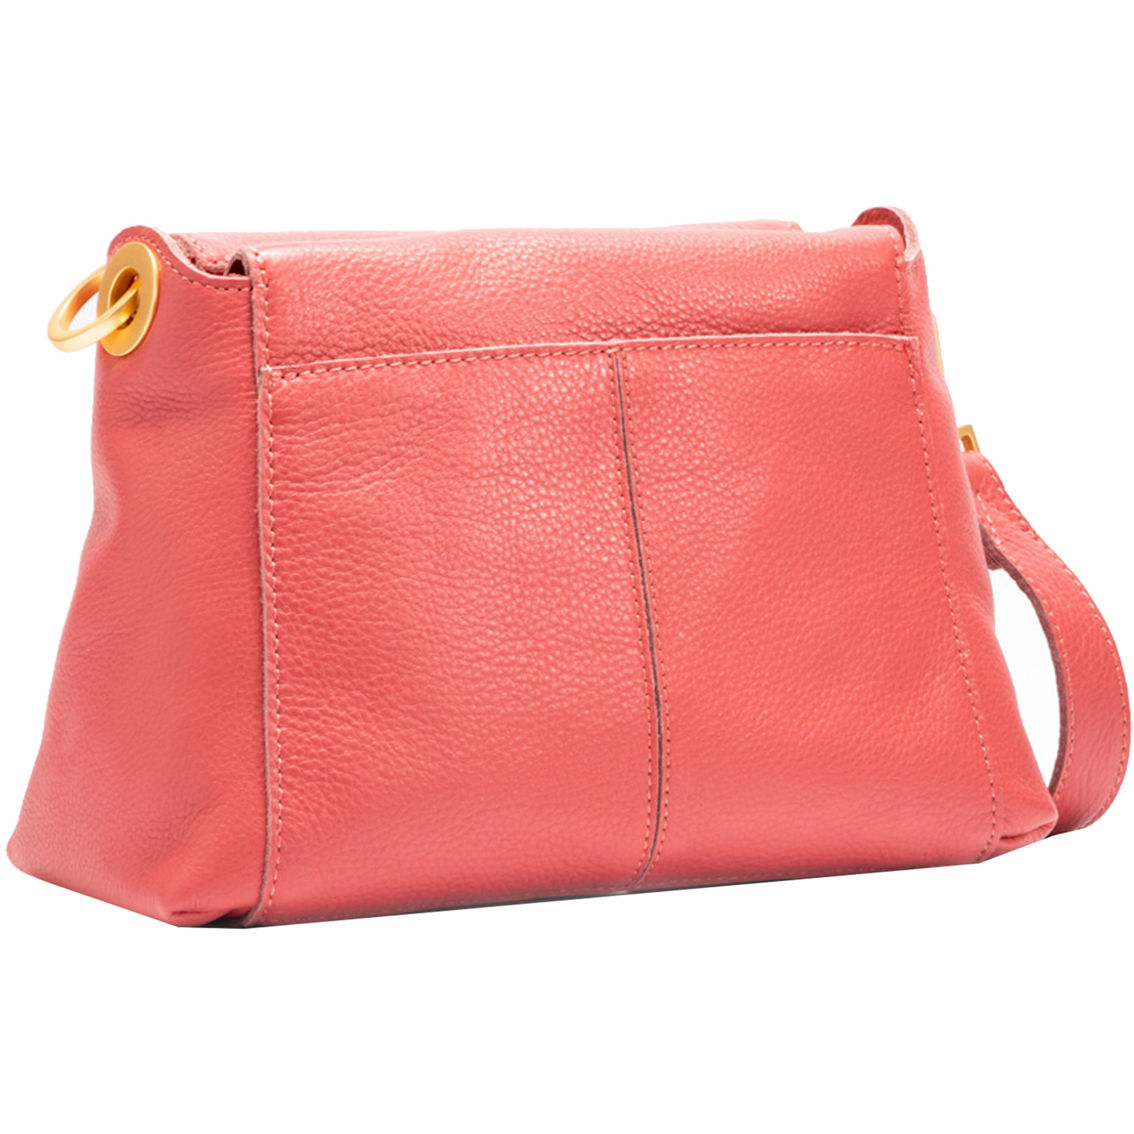 Hammitt Bryant Medium Shoulder Bag, Rouge Pink - Image 2 of 4